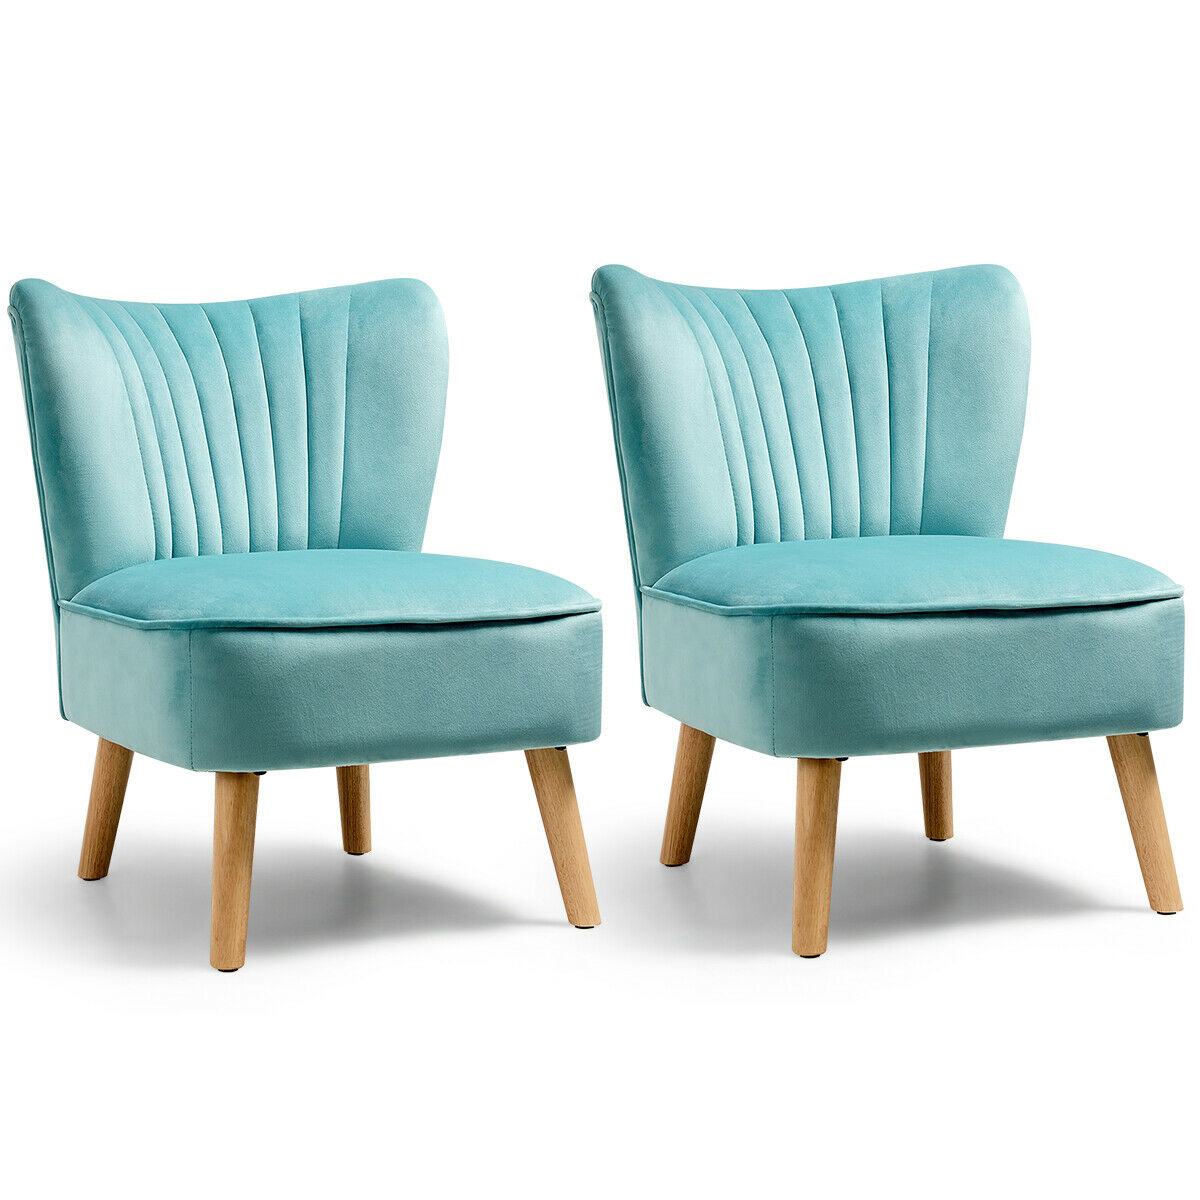 2PCS Accent Chair Armless Leisure Chair Single Sofa W/ Wood Legs Green/Blue/Pink - Green